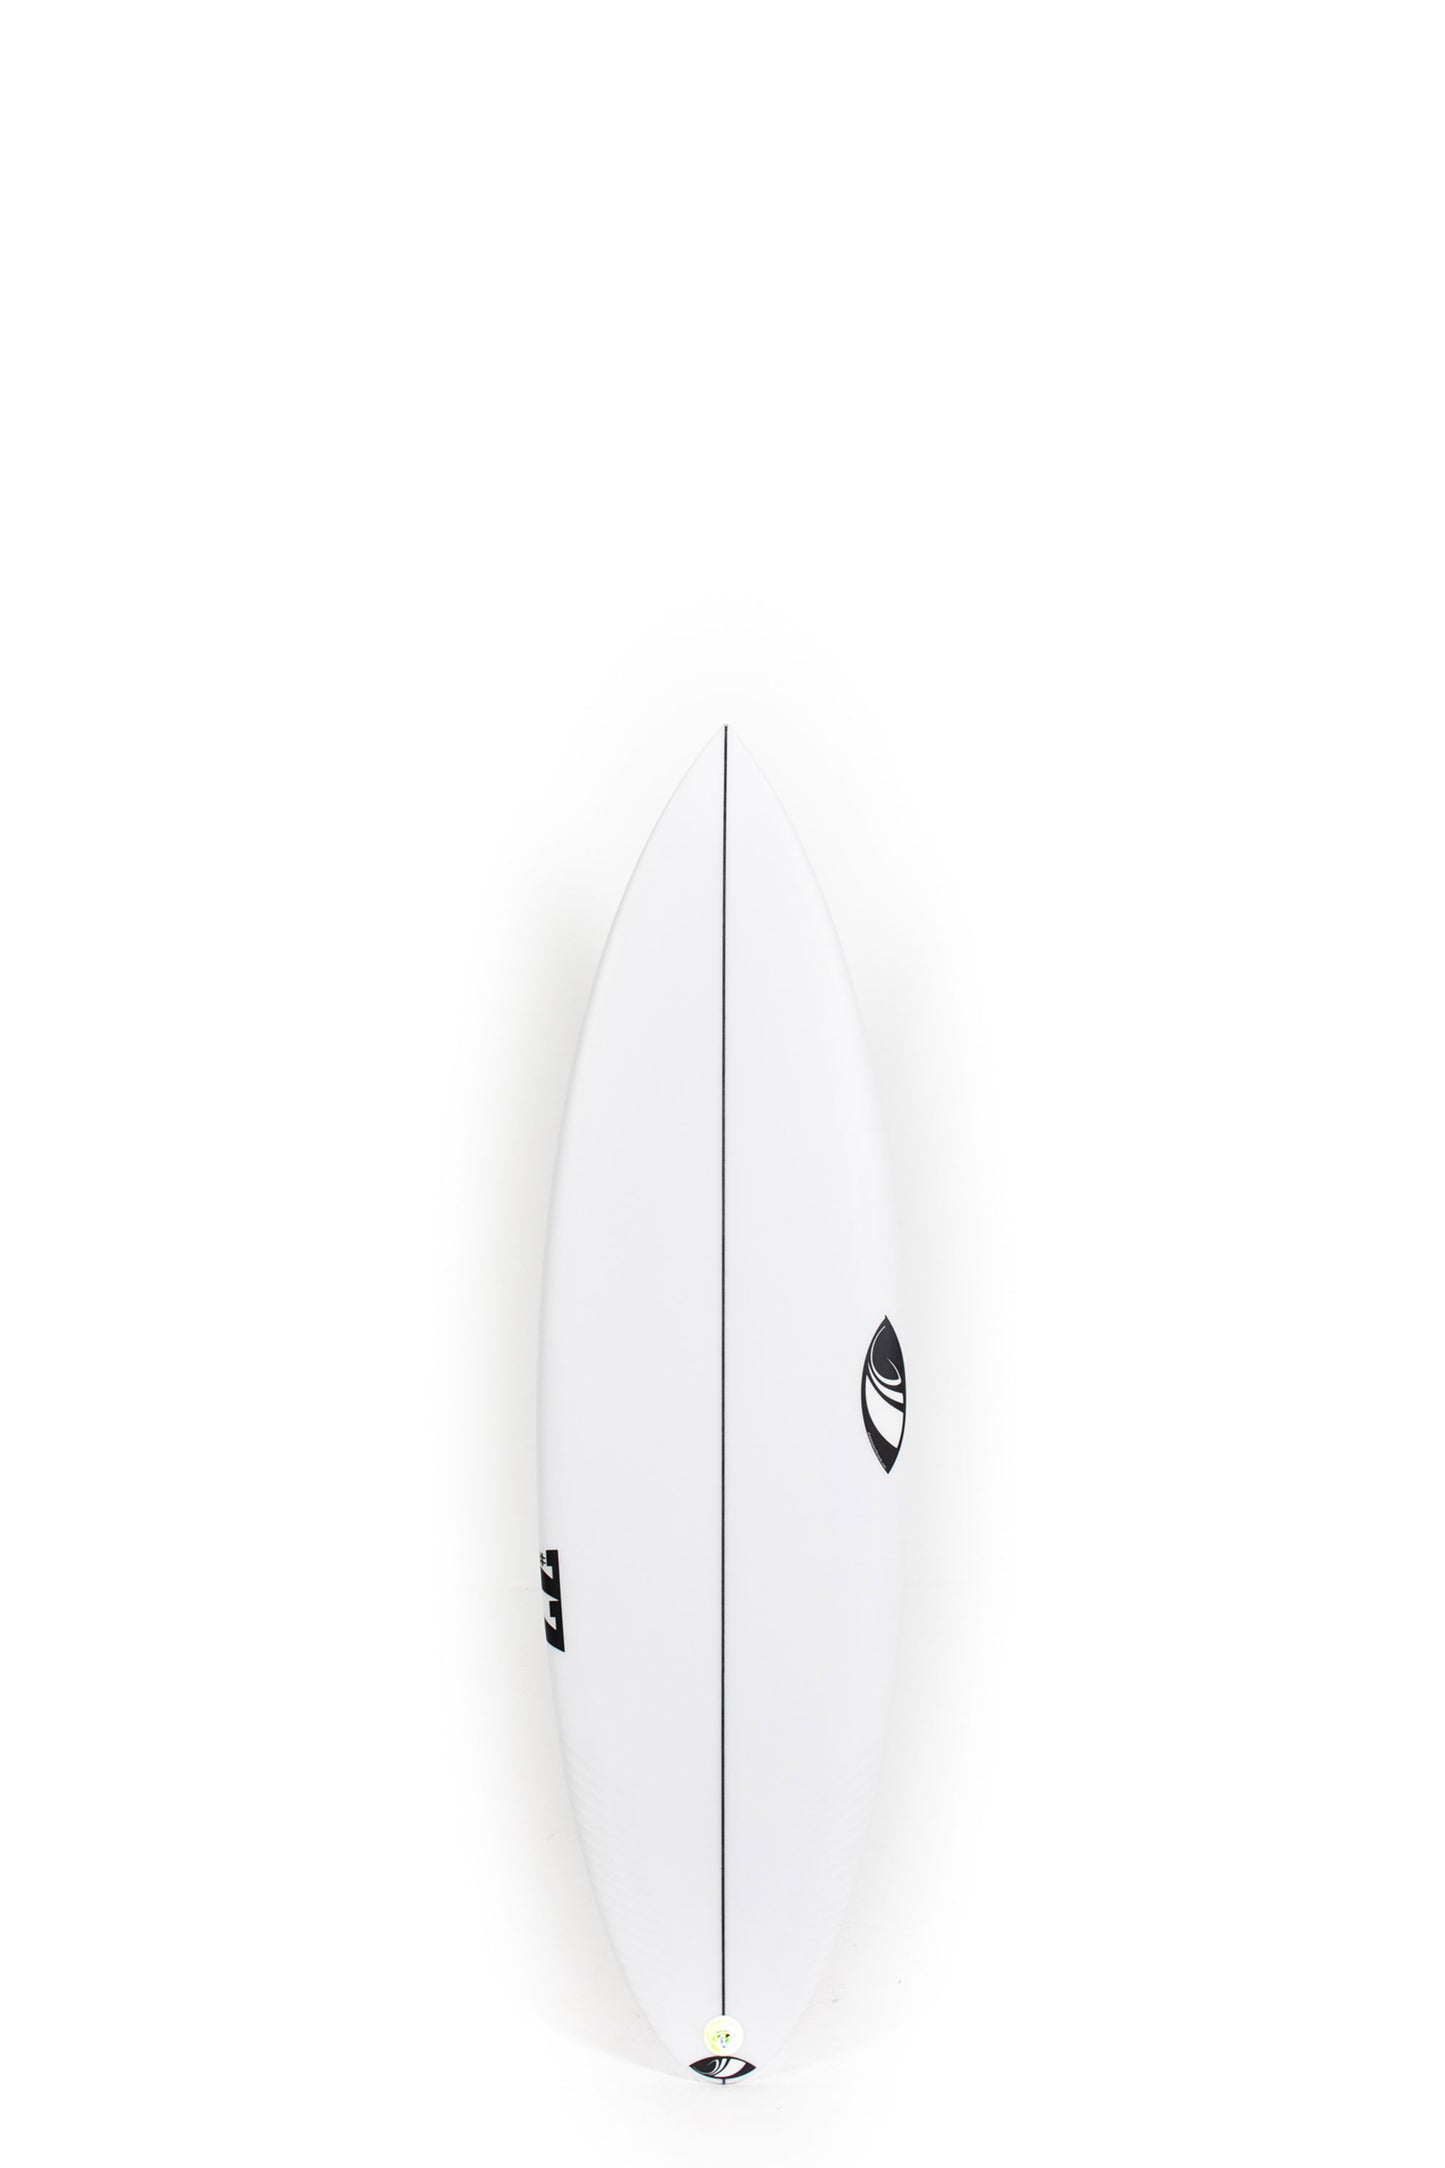 Sharp Eye Surfboards - #77 by Marcio Zouvi | Shop at PUKAS SURF SHOP